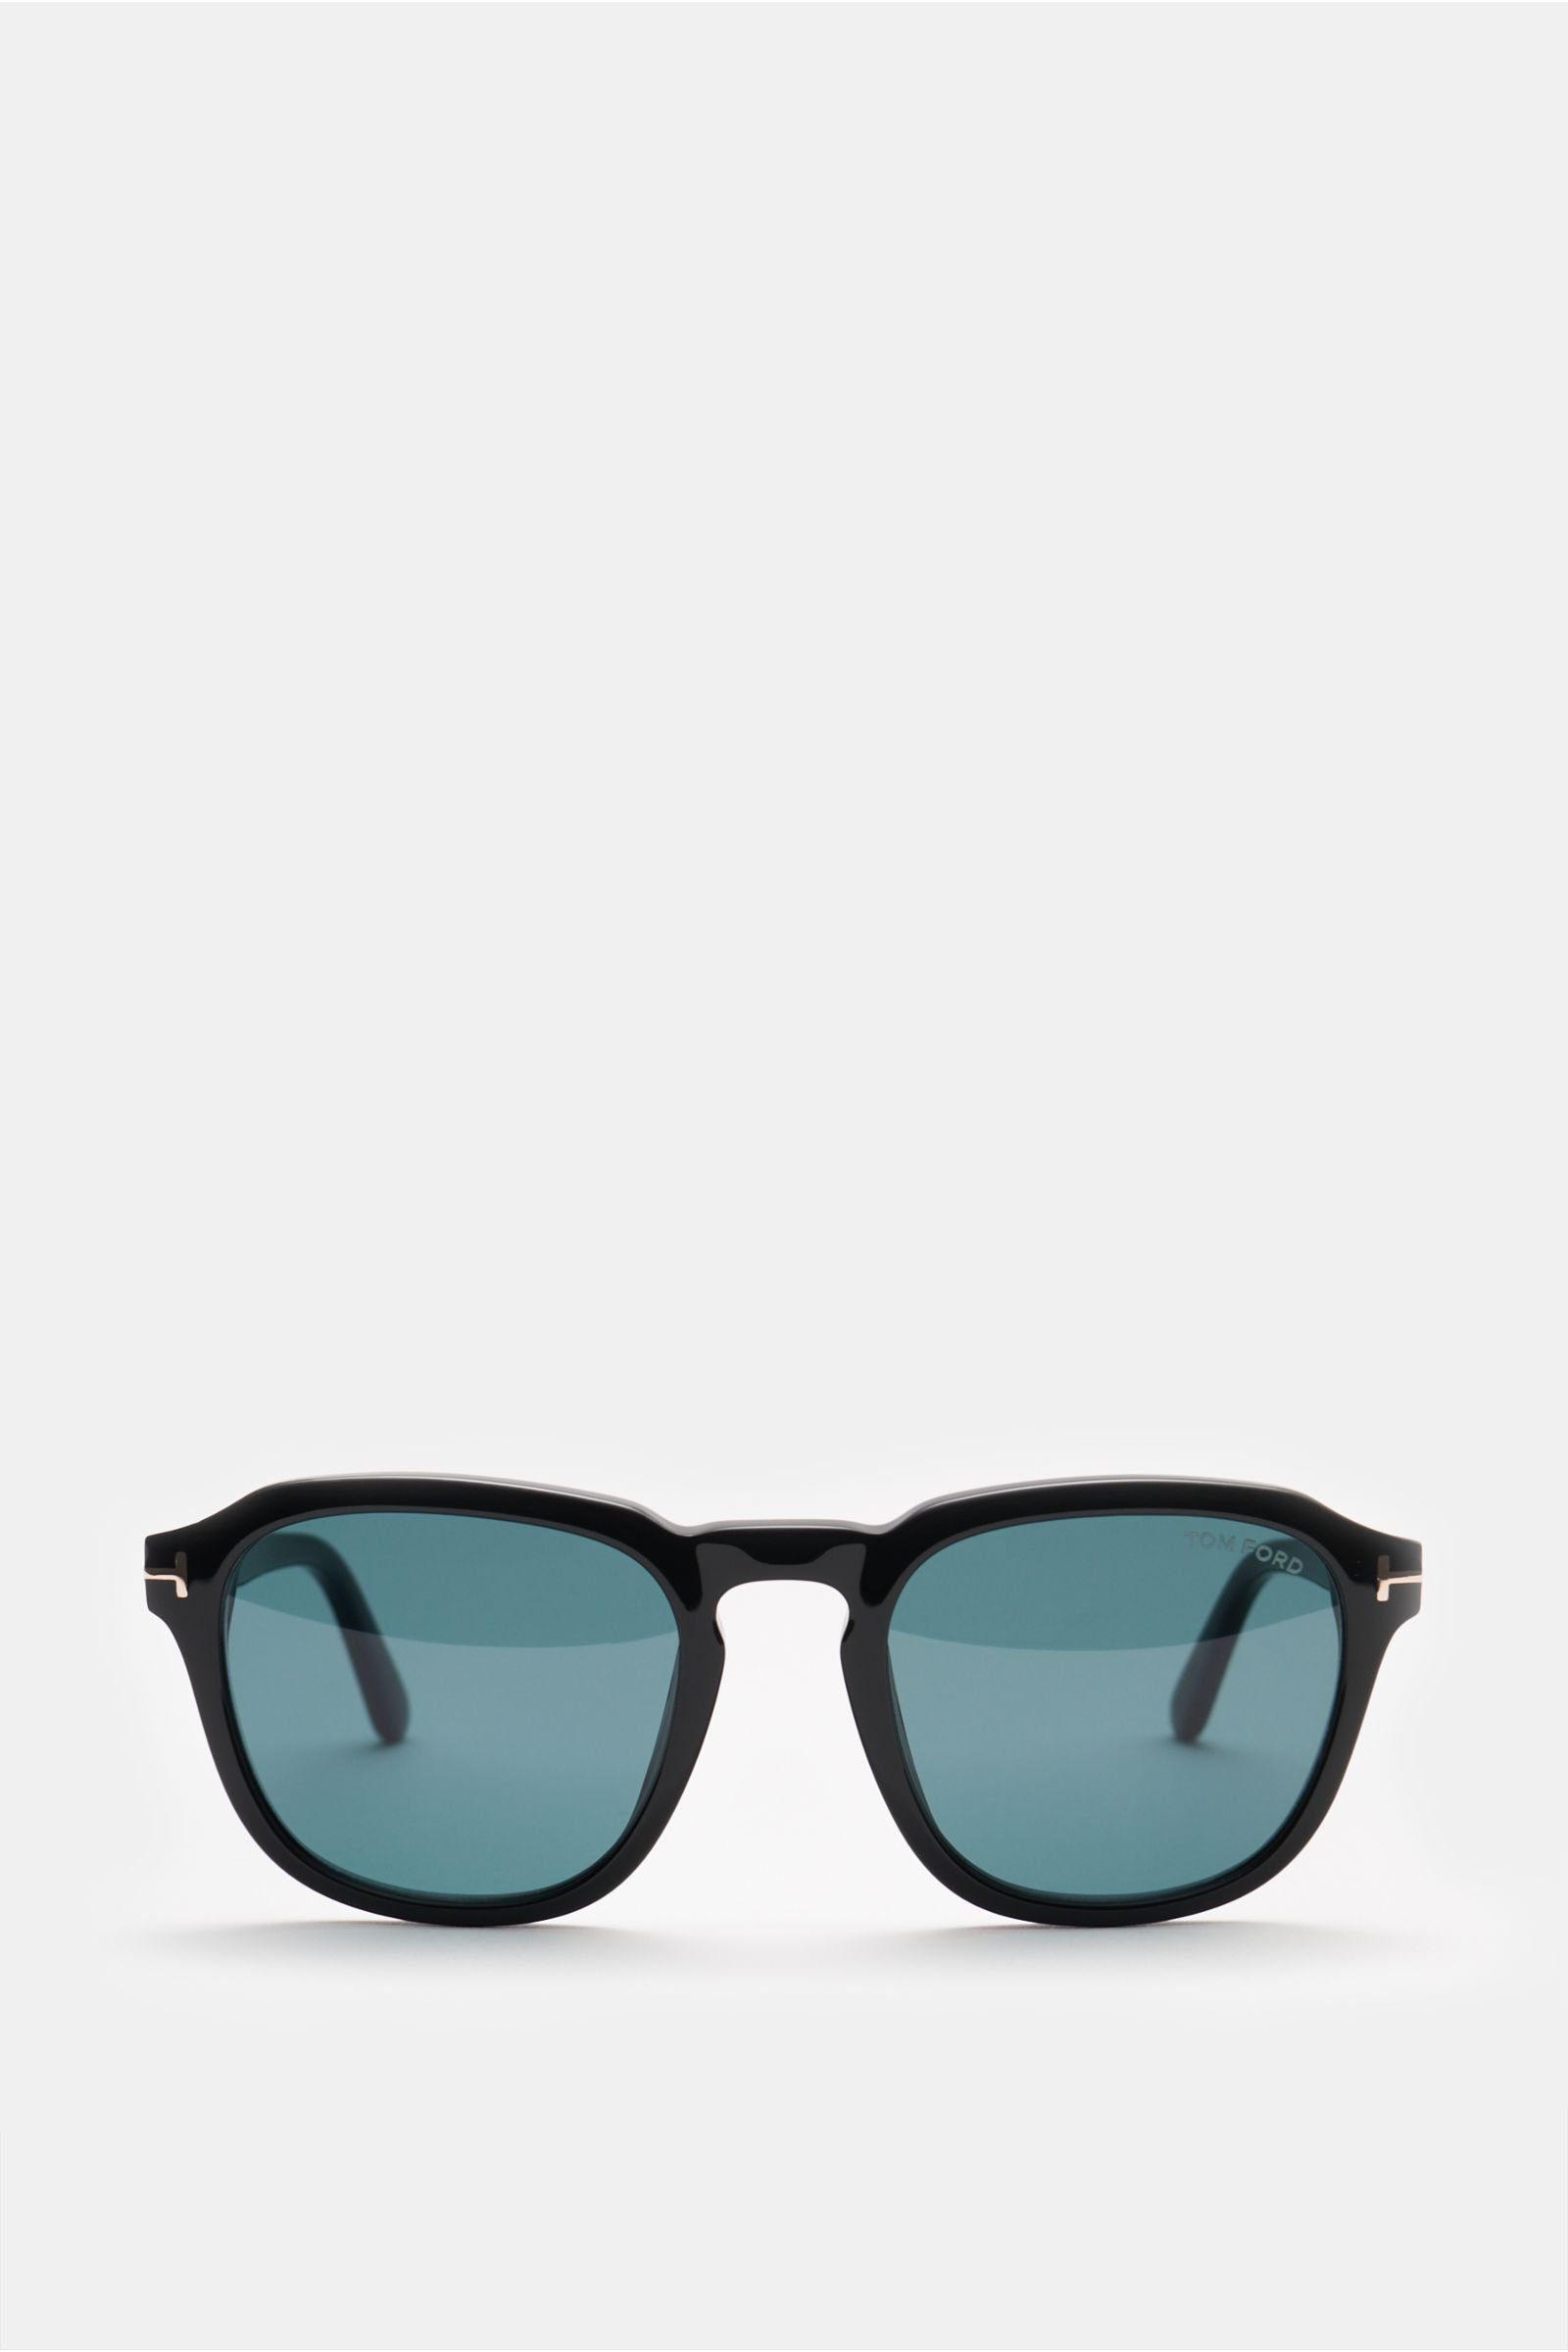 Sunglasses 'Avery' black/smoky blue